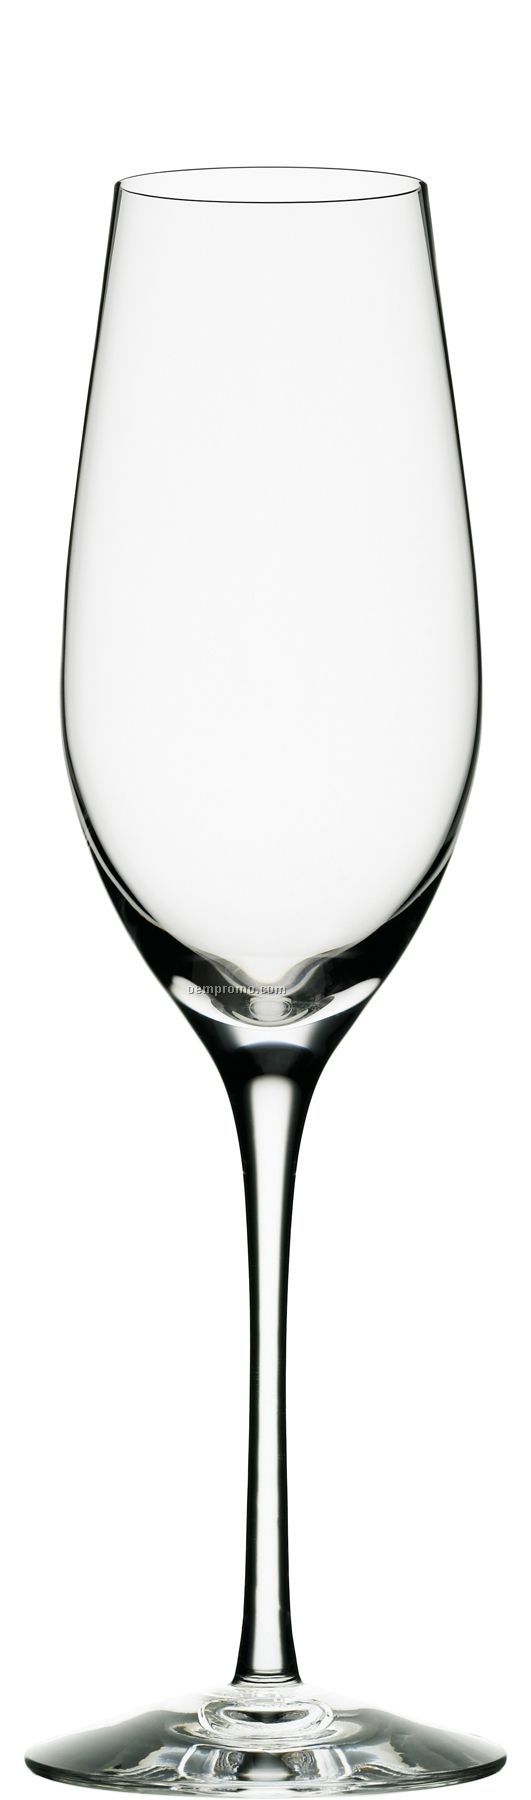 Merlot Crystal Champagne Flute Glass By Erika Lagerbielke